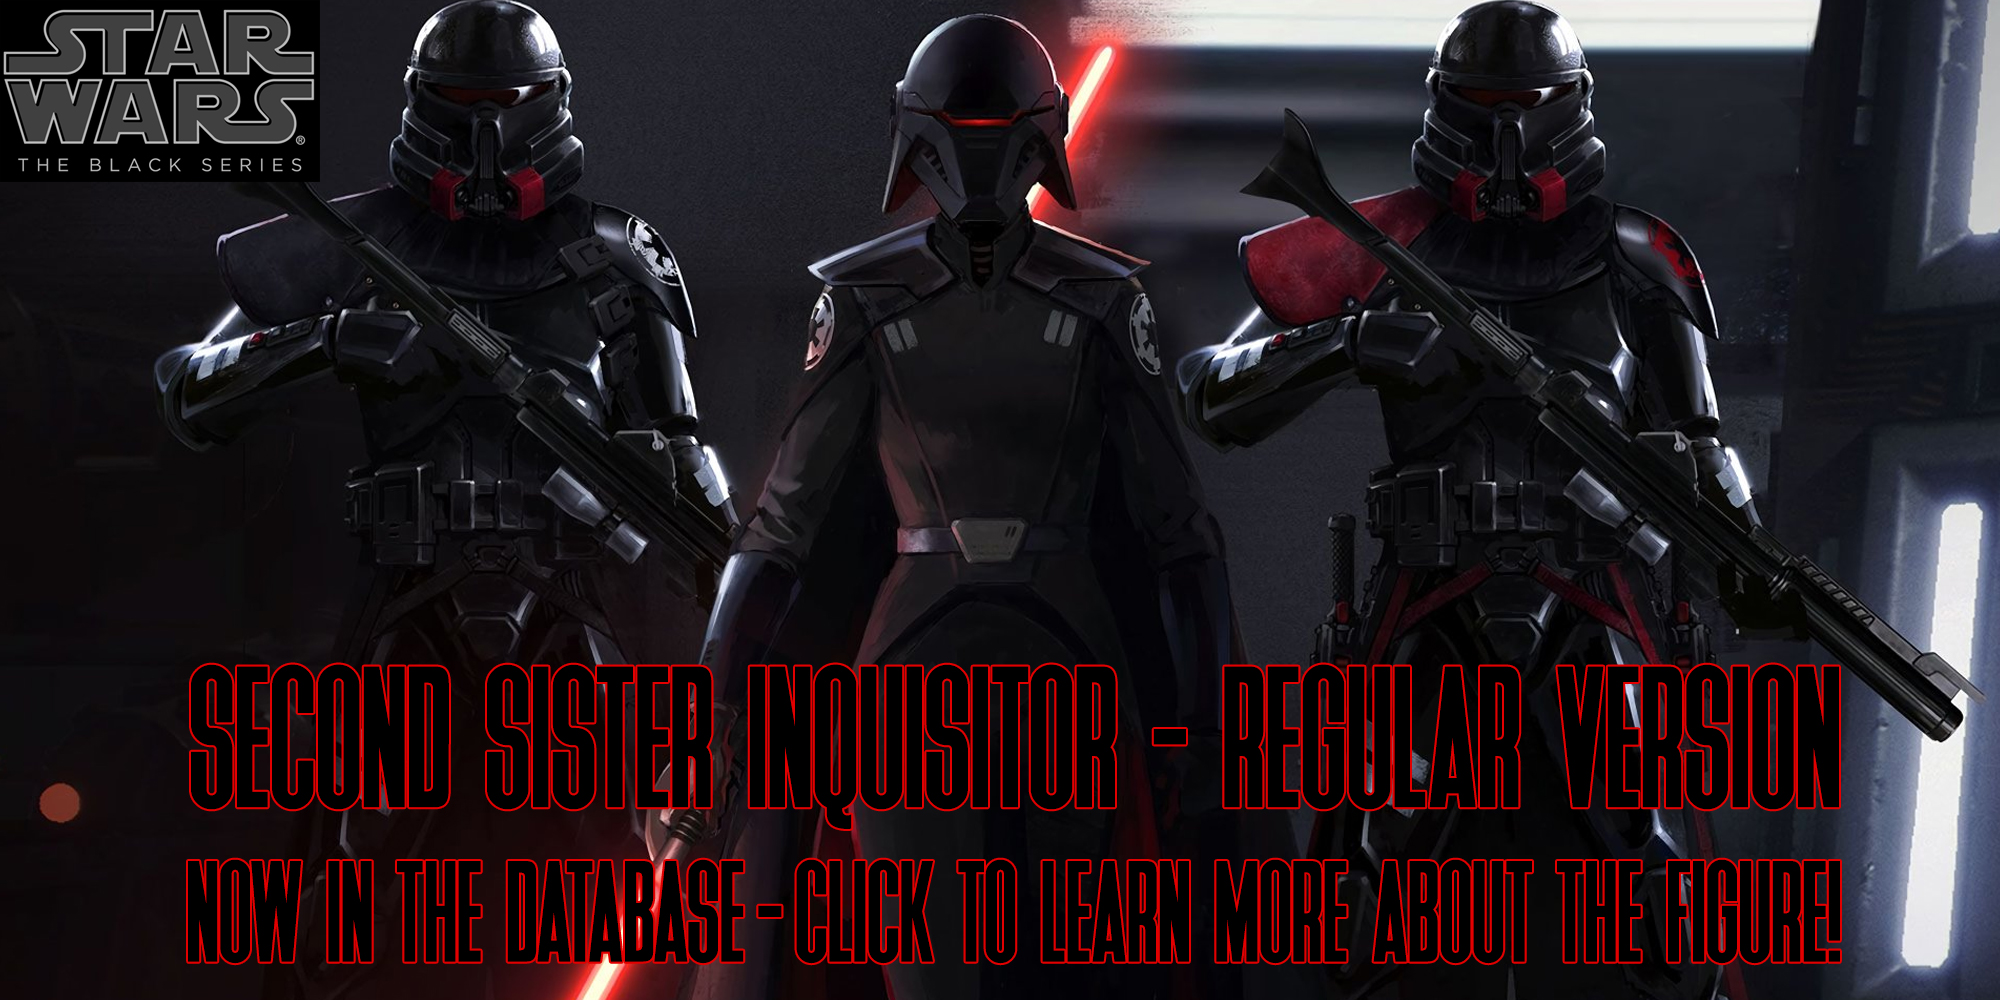 New Addition: Black Series Second Sister Inquisitor (Regular Version)